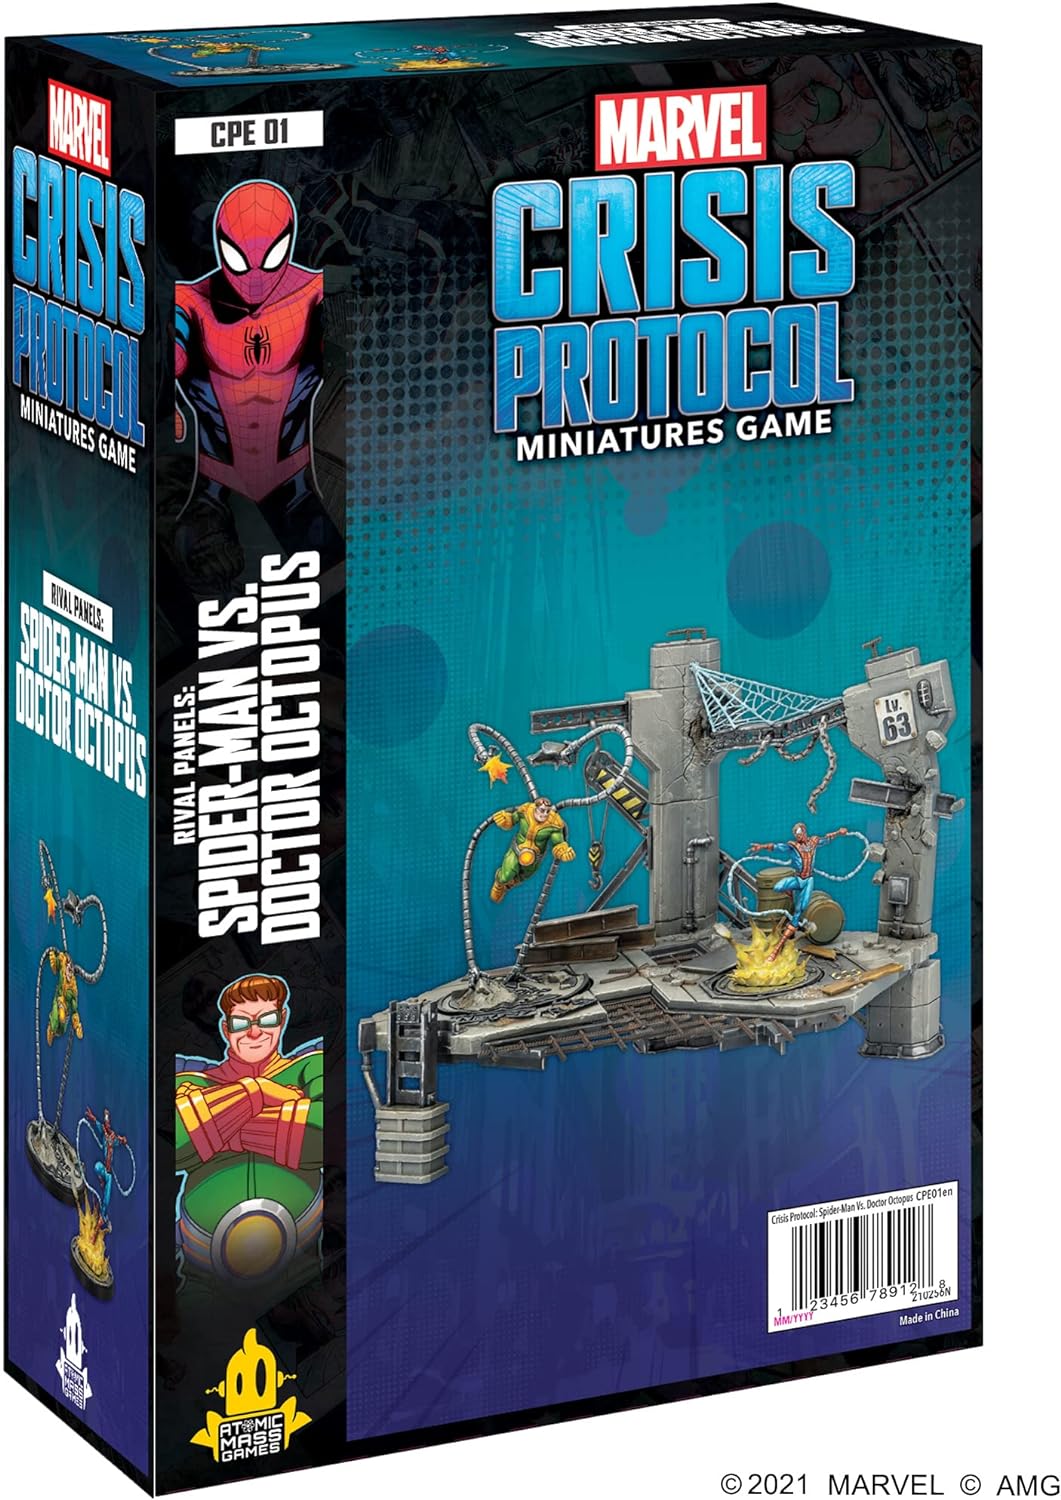 Marvel Crisis Protocol Rival Panels Spider-Man gegen Doctor Octopus